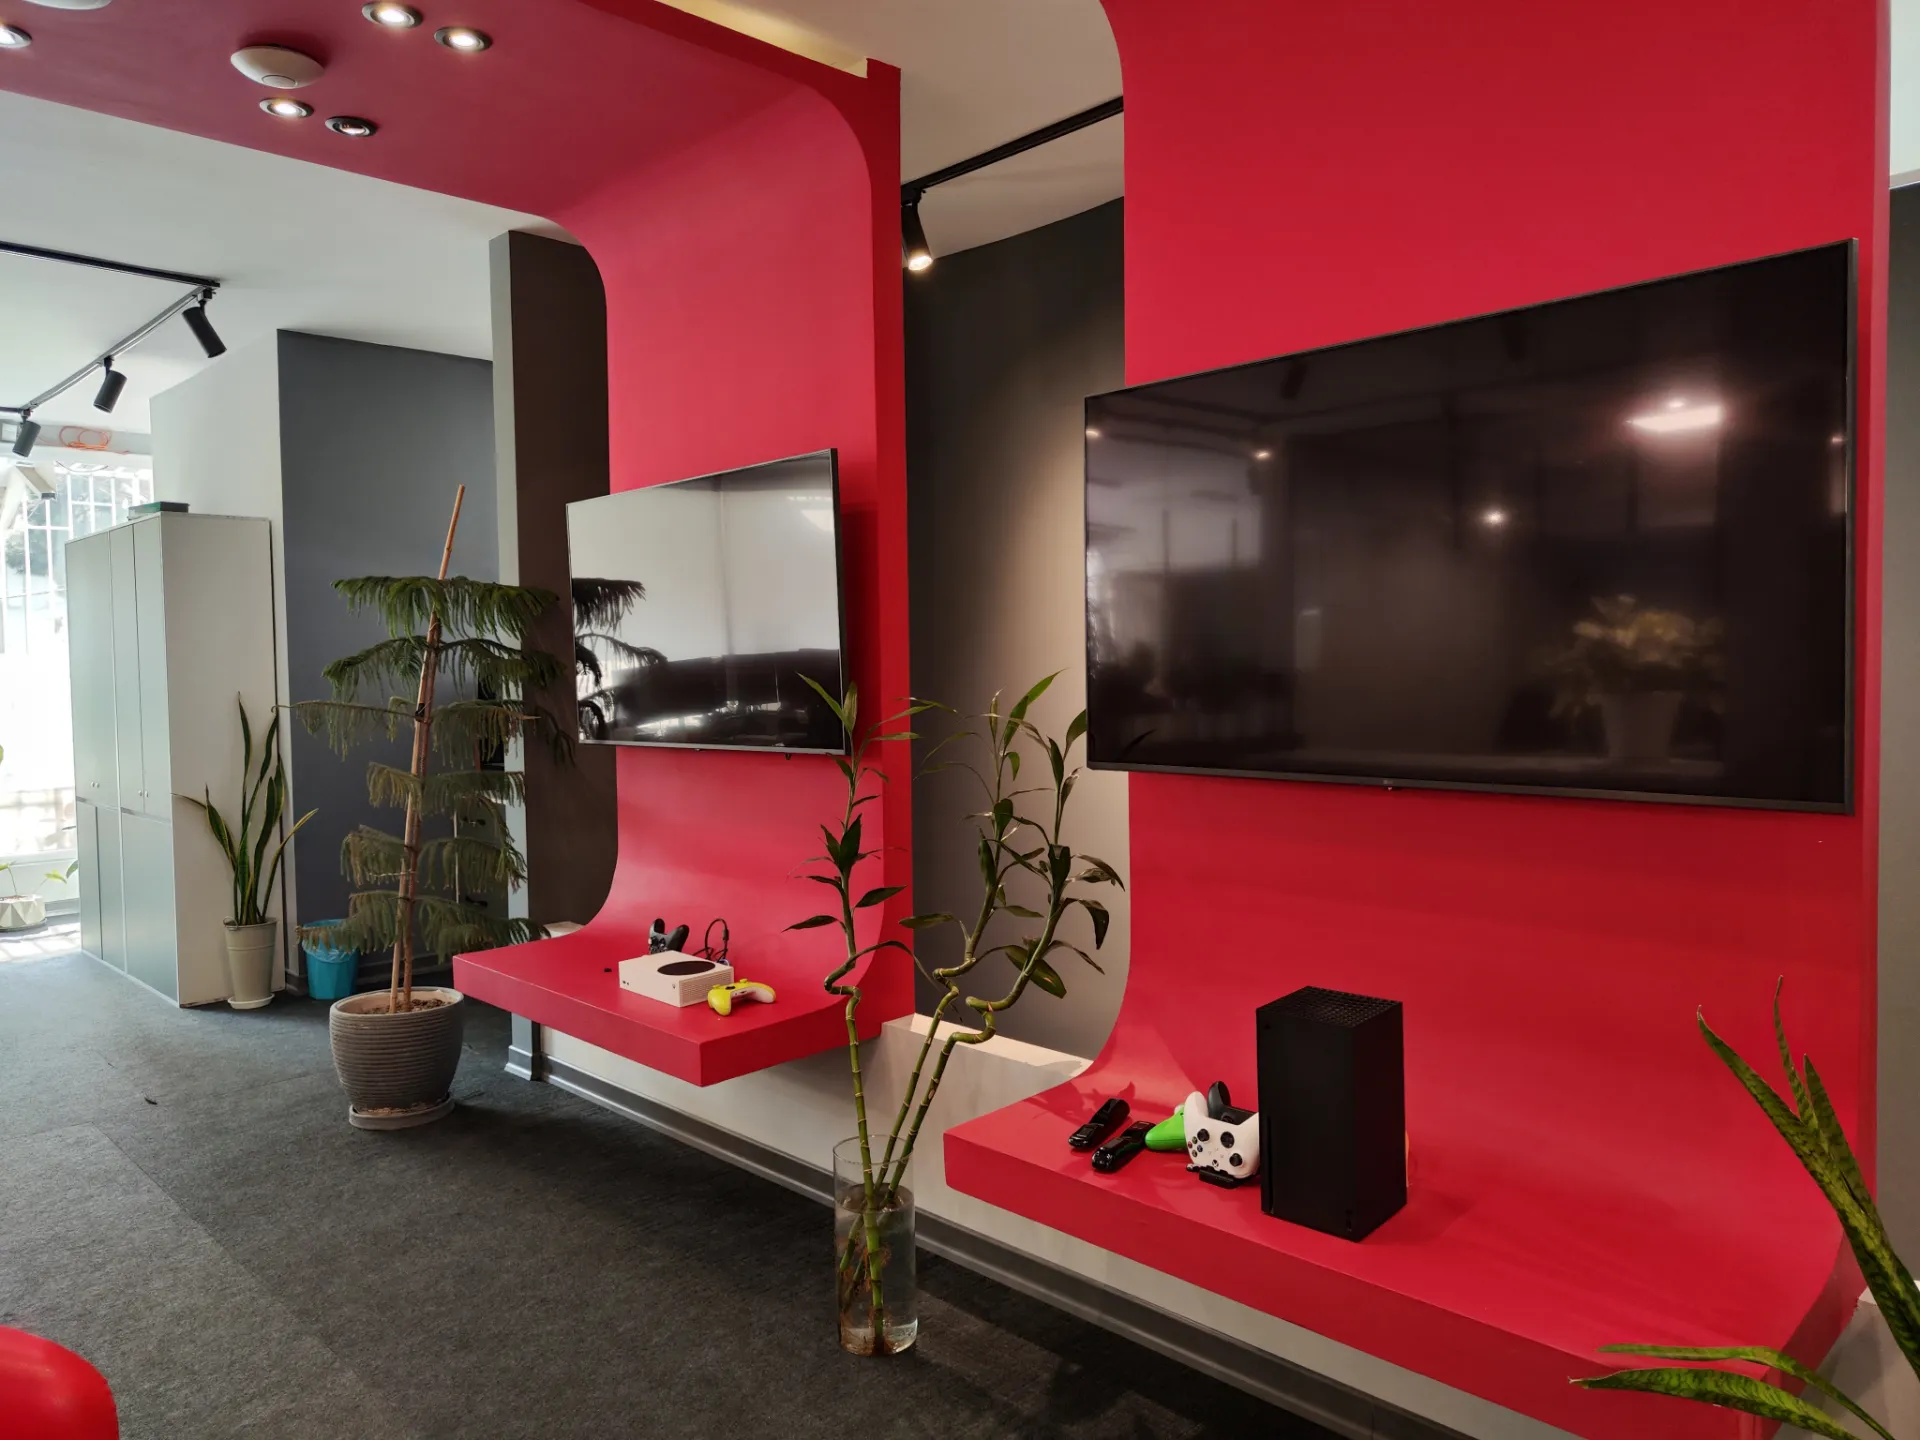 دو تلویزیون روی دیوار قرمز در دفتر